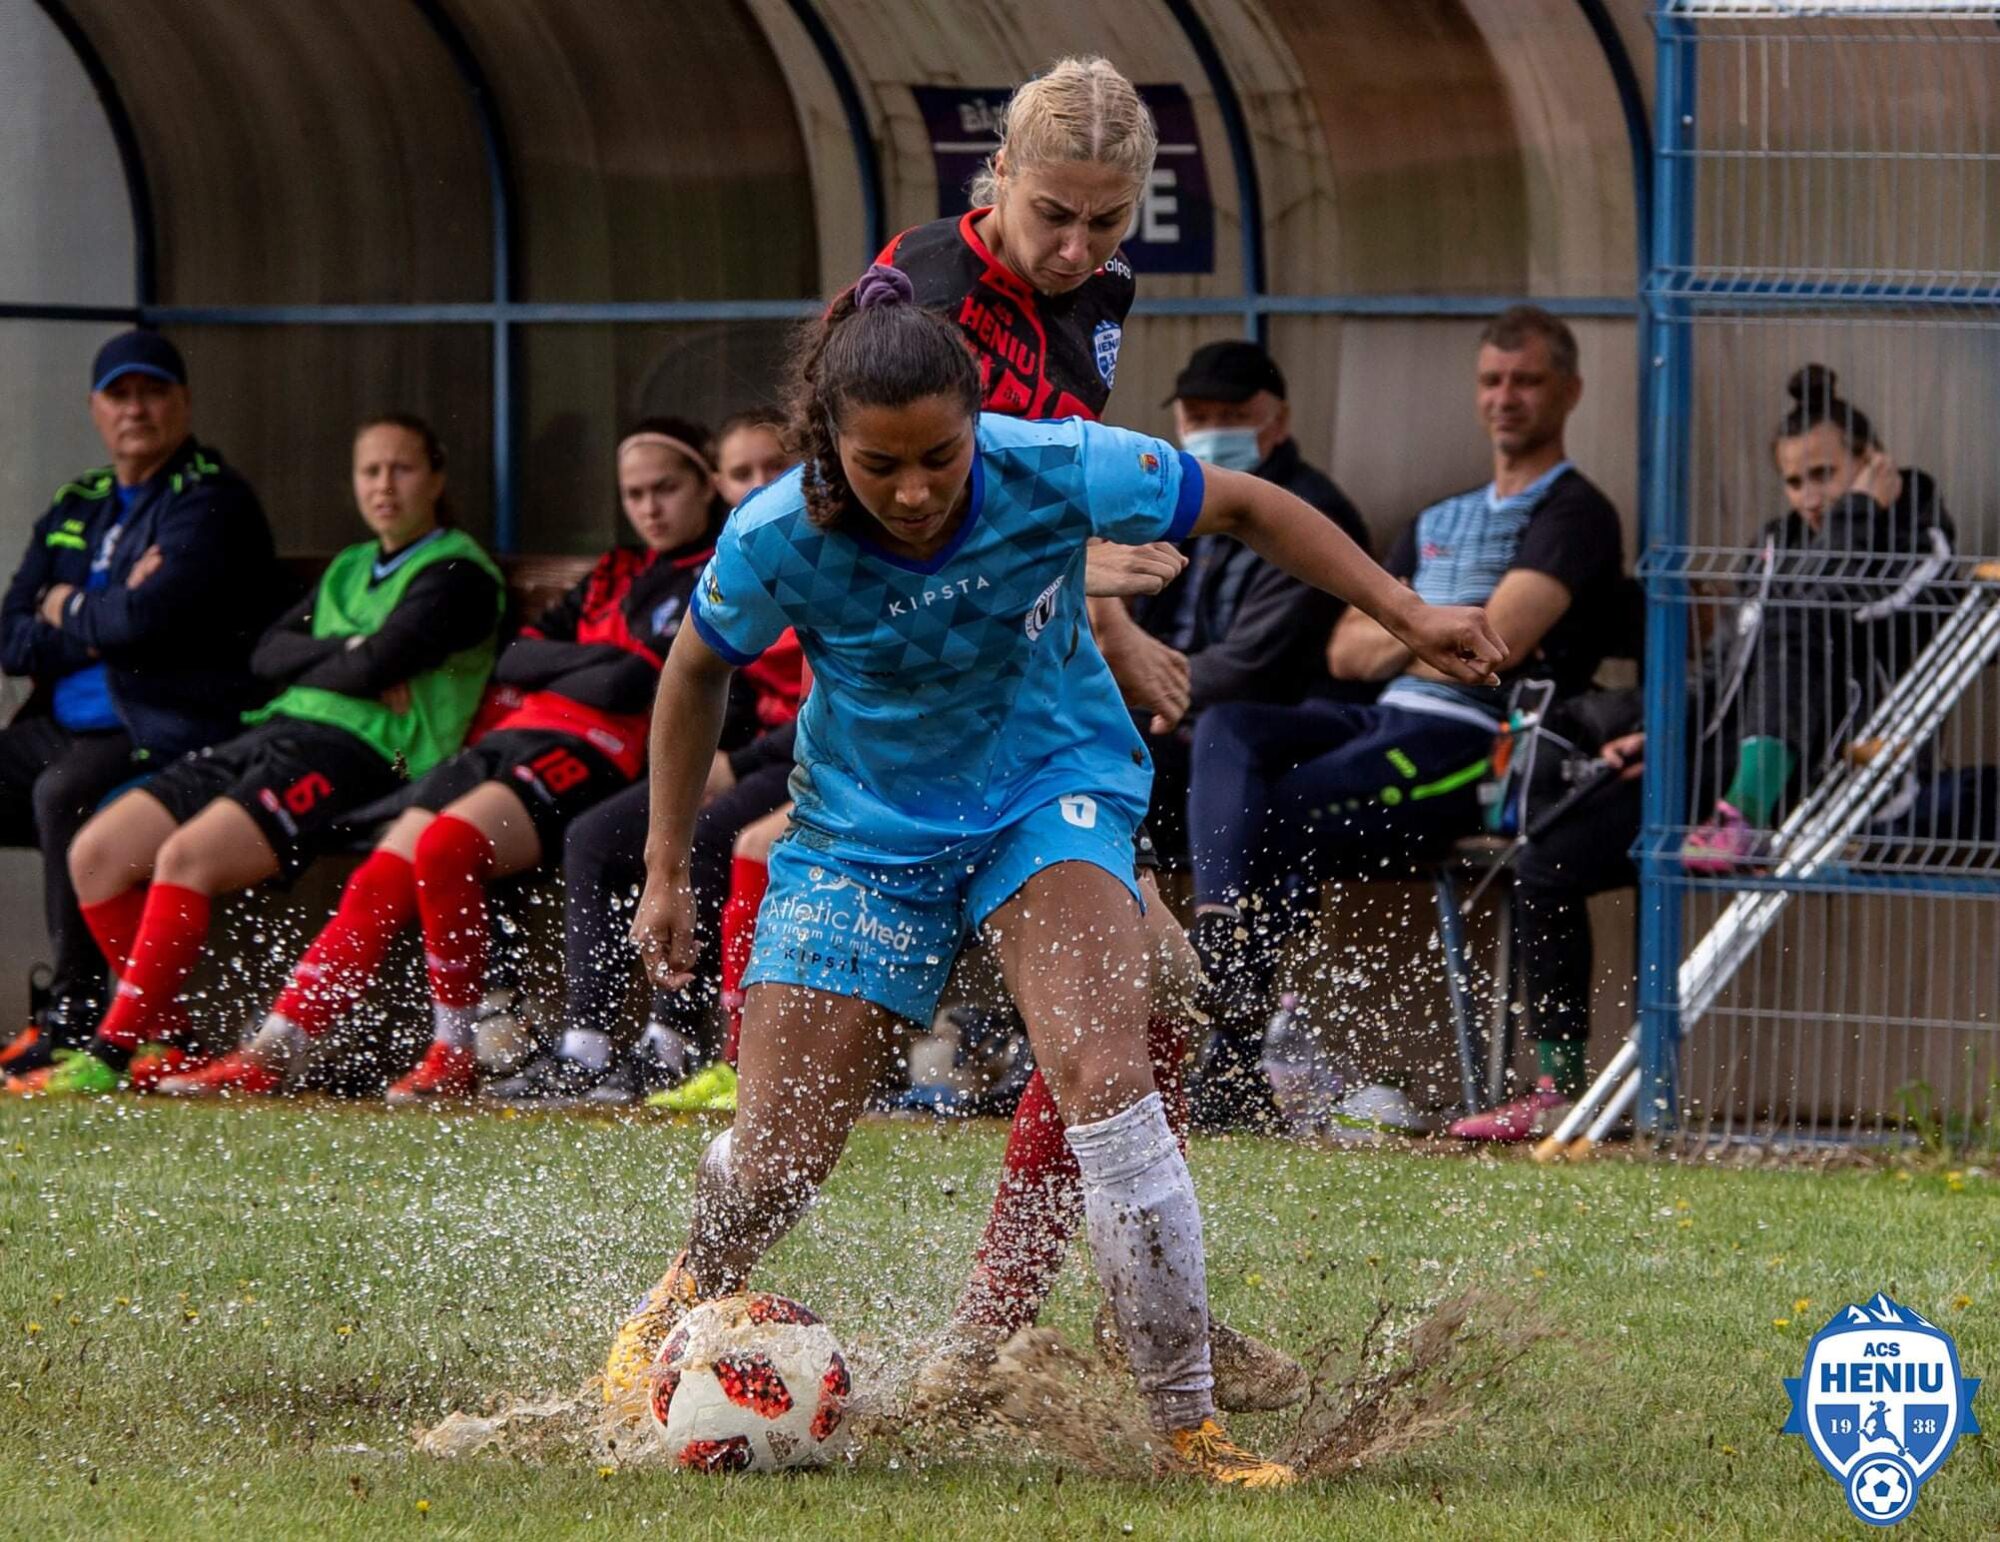 defending soccer ball in mud